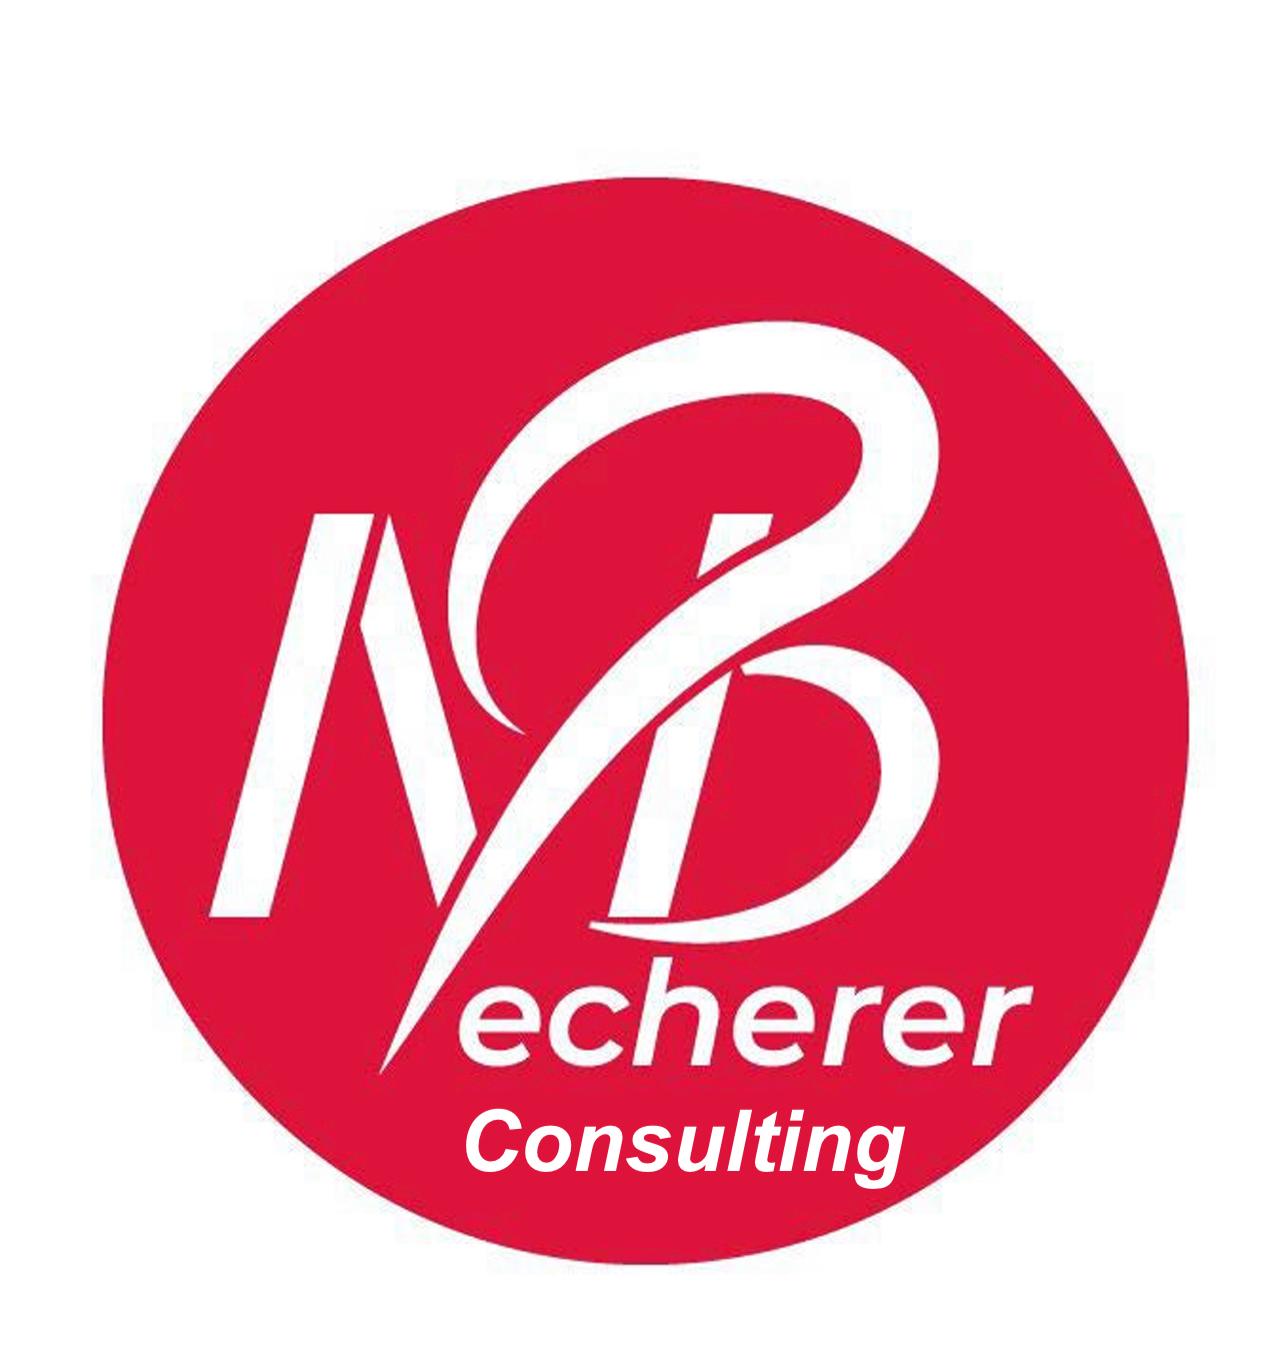 Becherer consulting